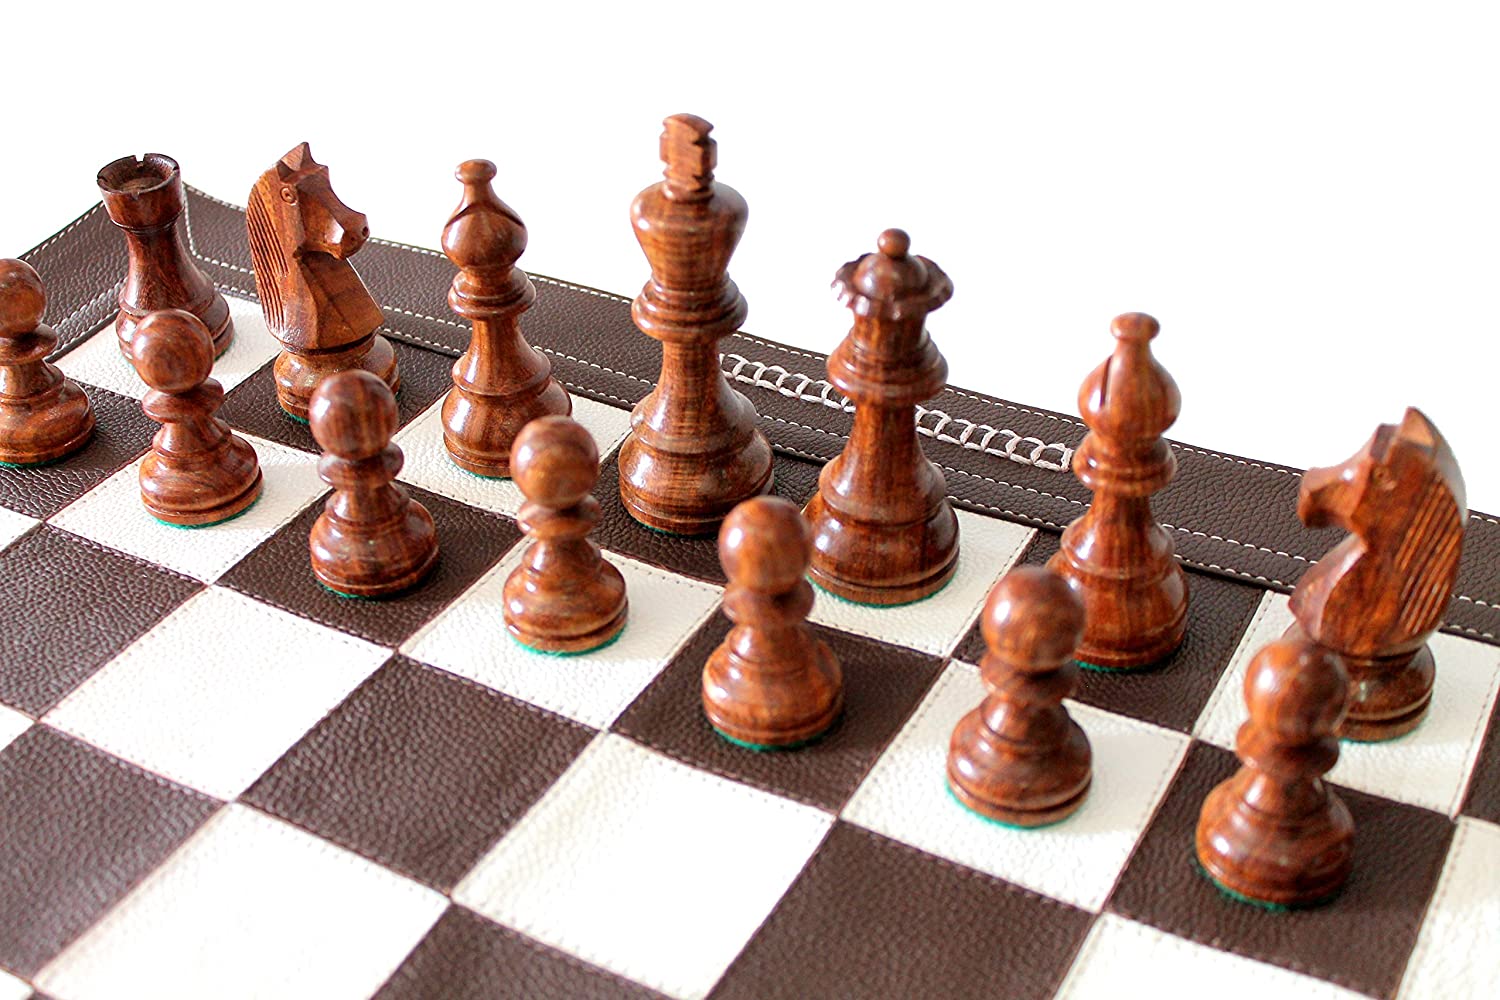  LIUHUI Crafted Chesspiece Tournament Roll-Up Chess Set